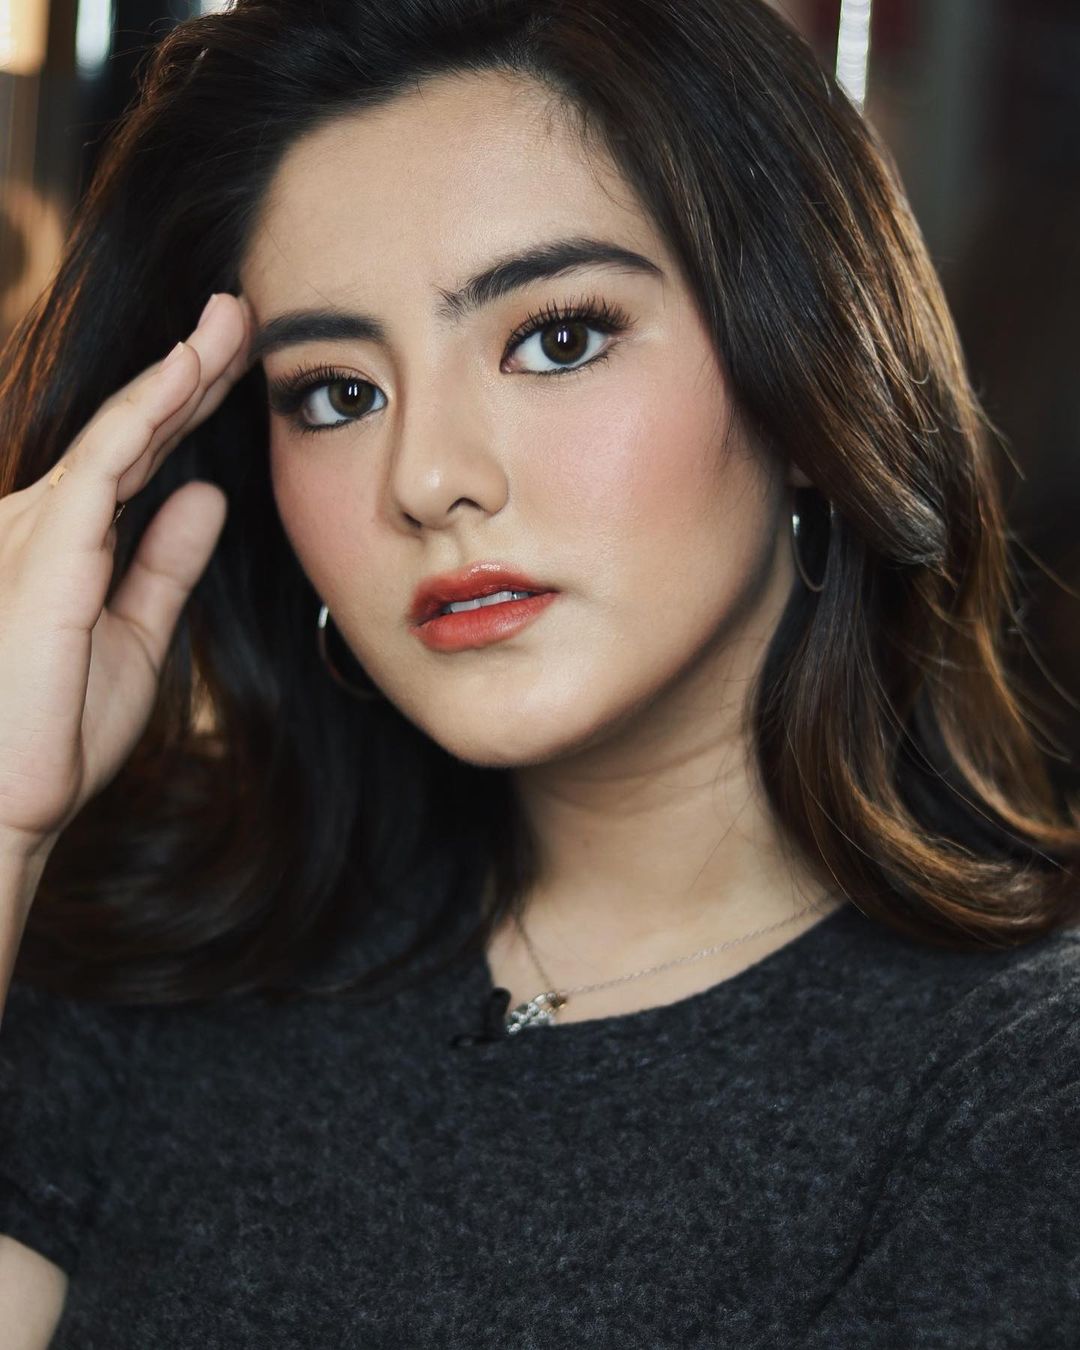 PHOTOS: Cassy Legaspi's Fresh, Pretty Makeup Looks